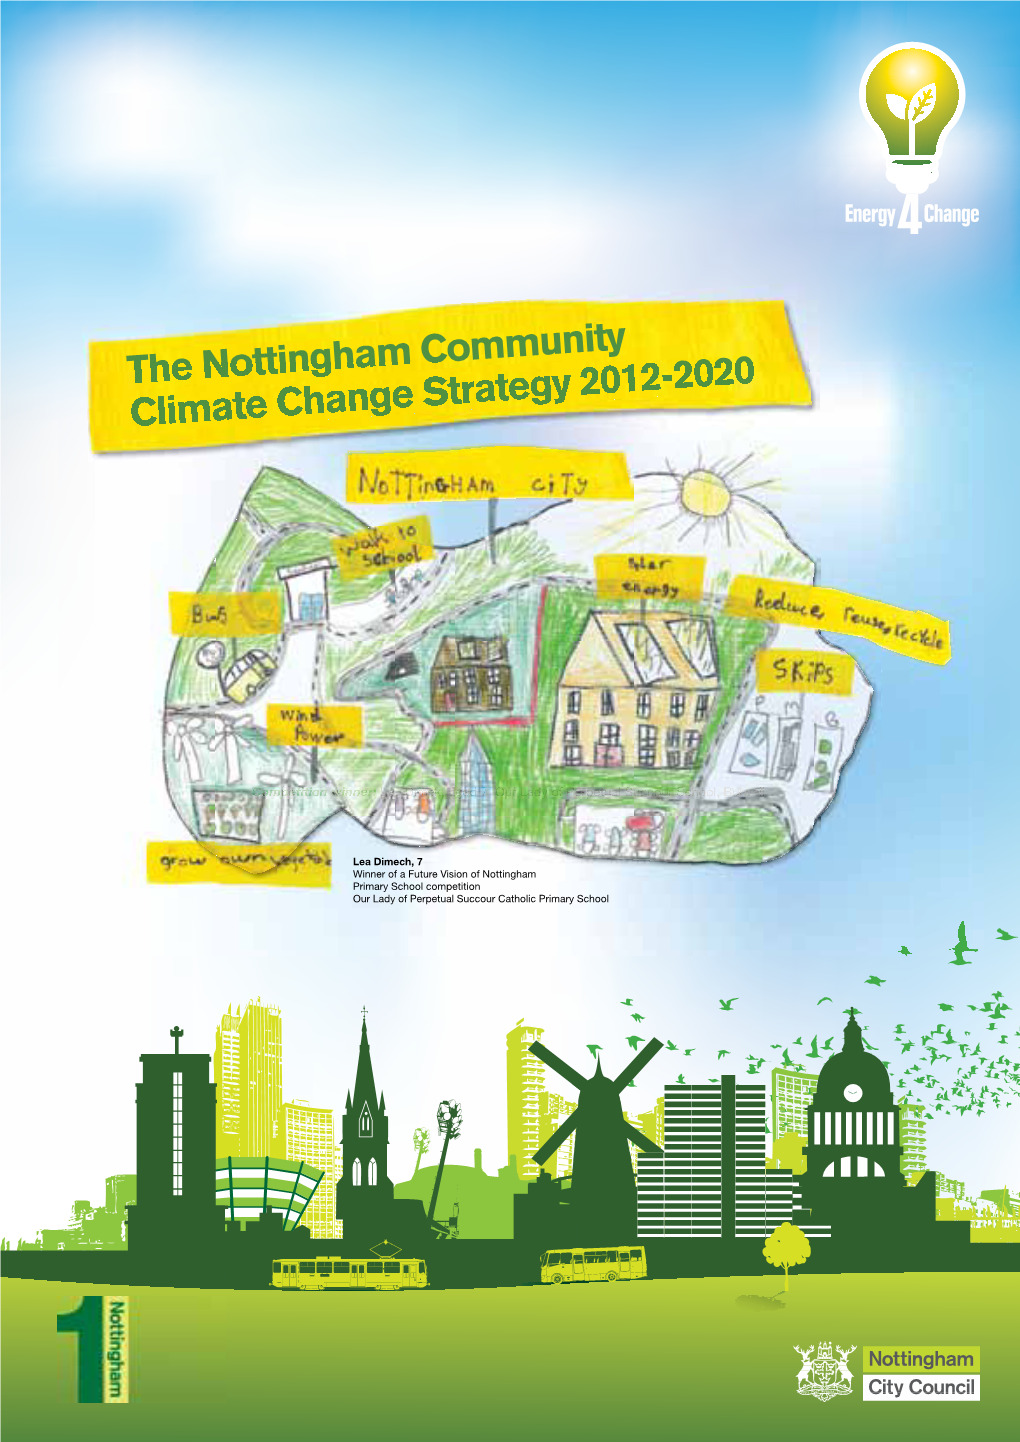 The Nottingham Community Climate Change Strategy 2012-2020